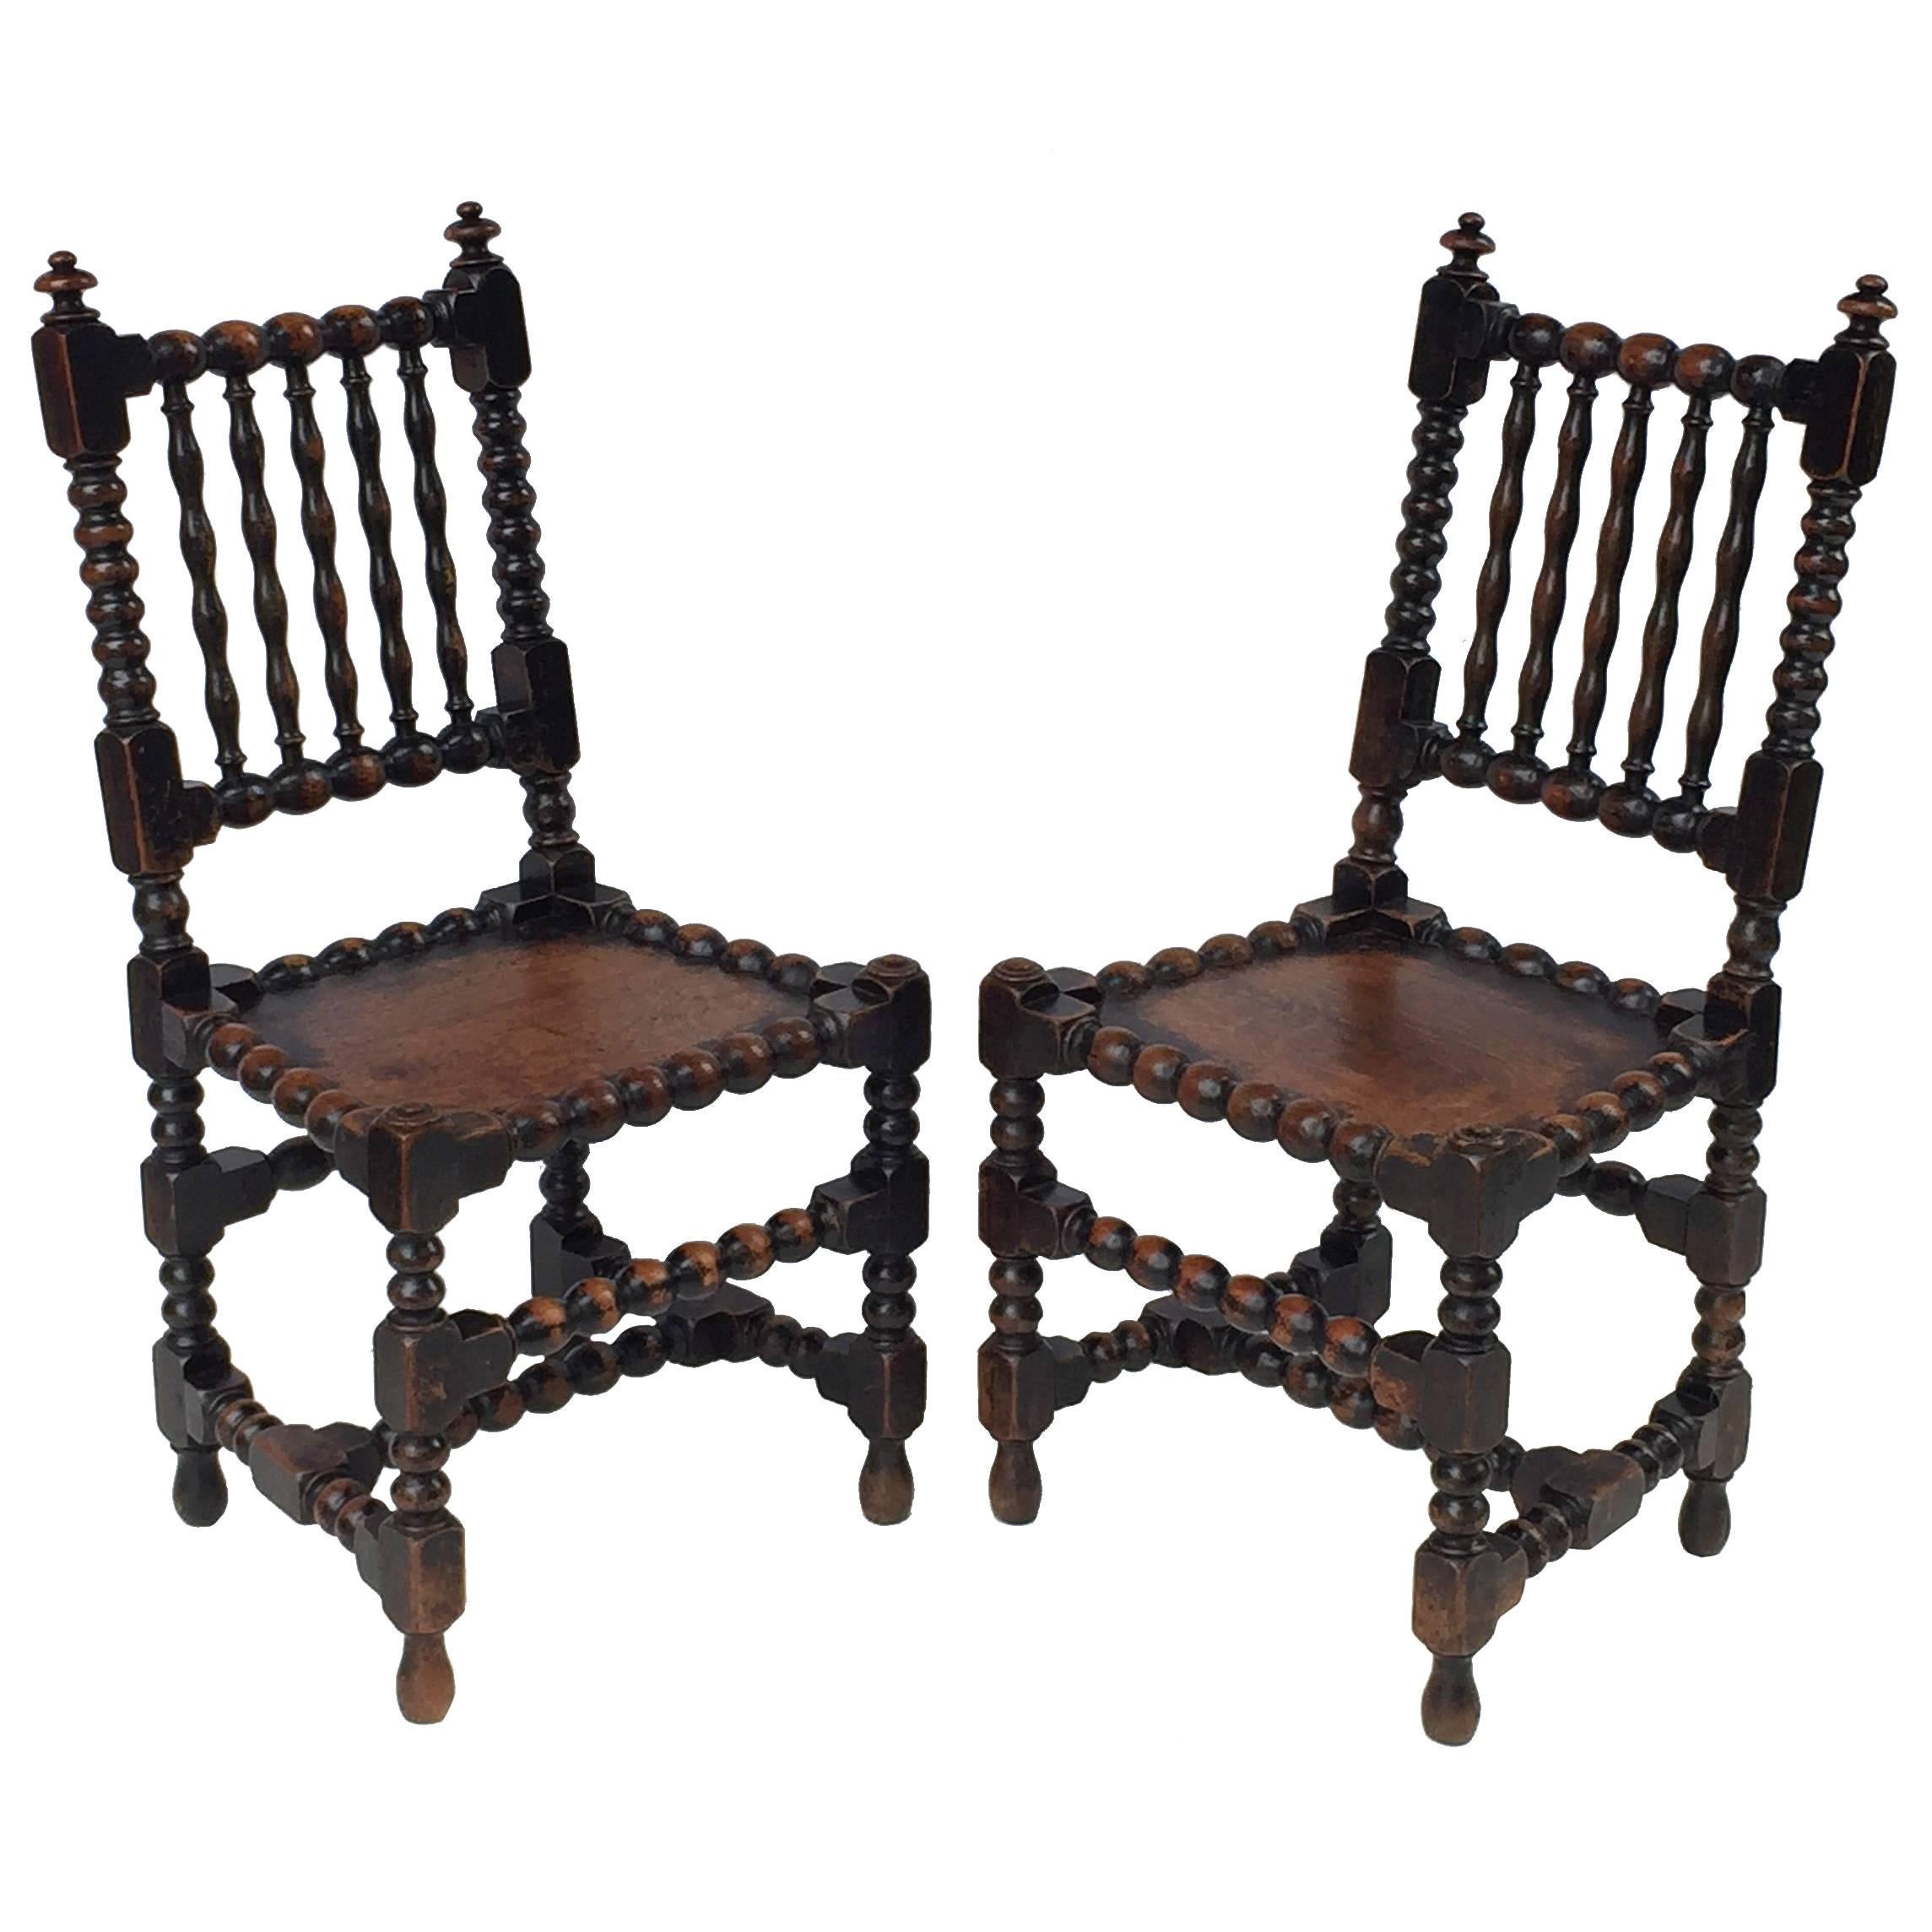 English Bobbin Chairs from the Georgian Era